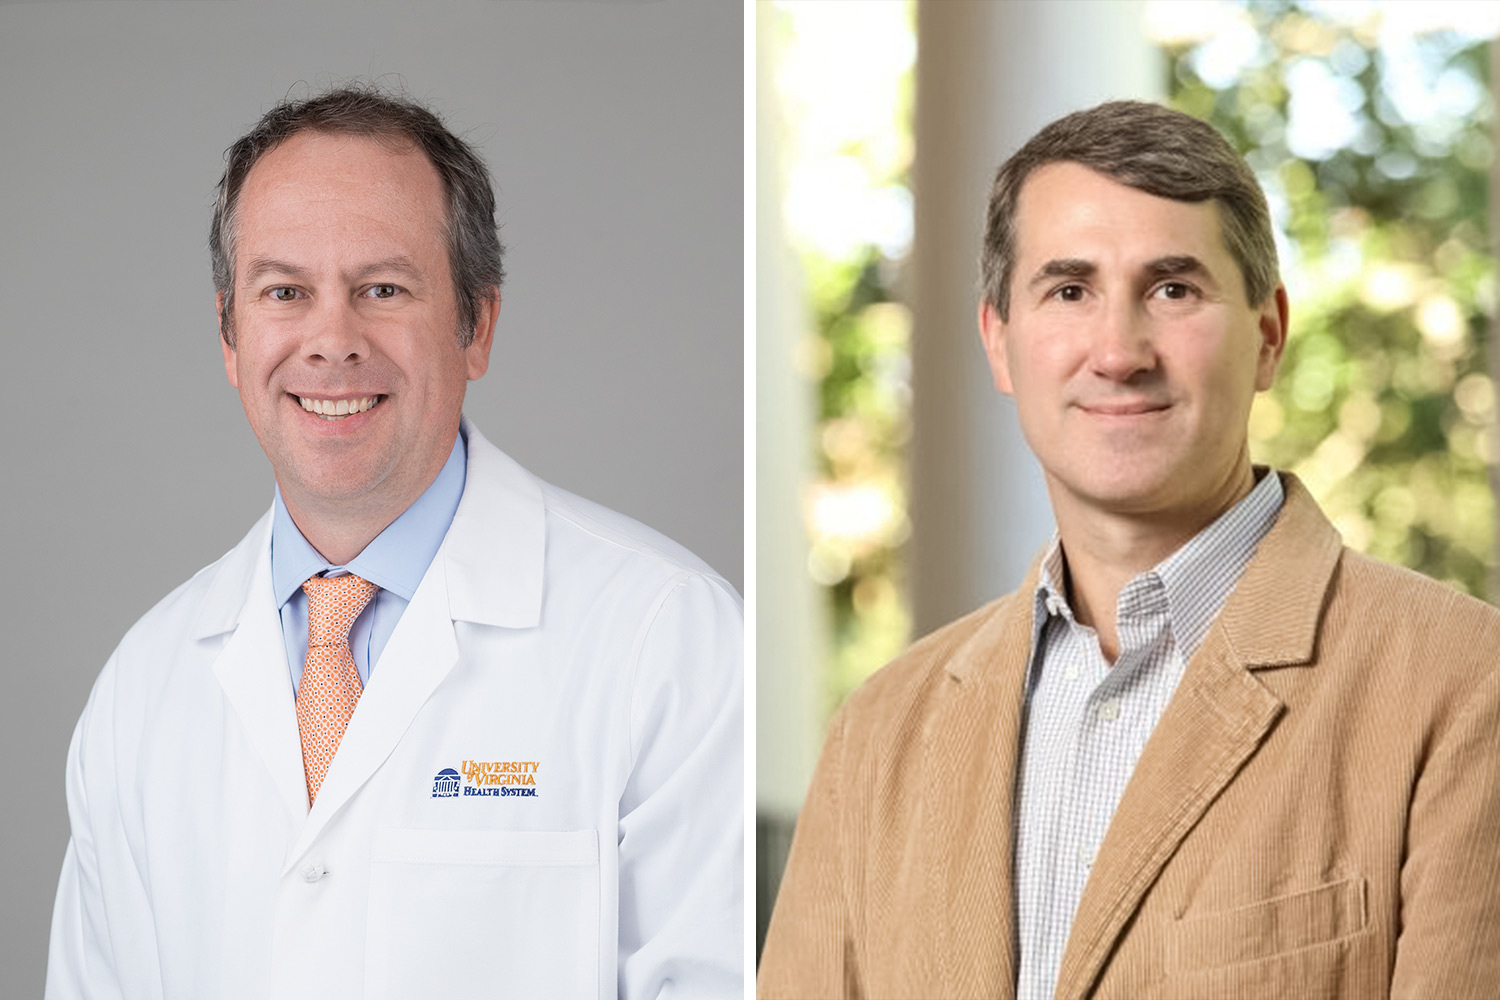 University of Virginia pediatric cardiologist Dr. Michael McCulloch and UVA data scientist Michael Porter